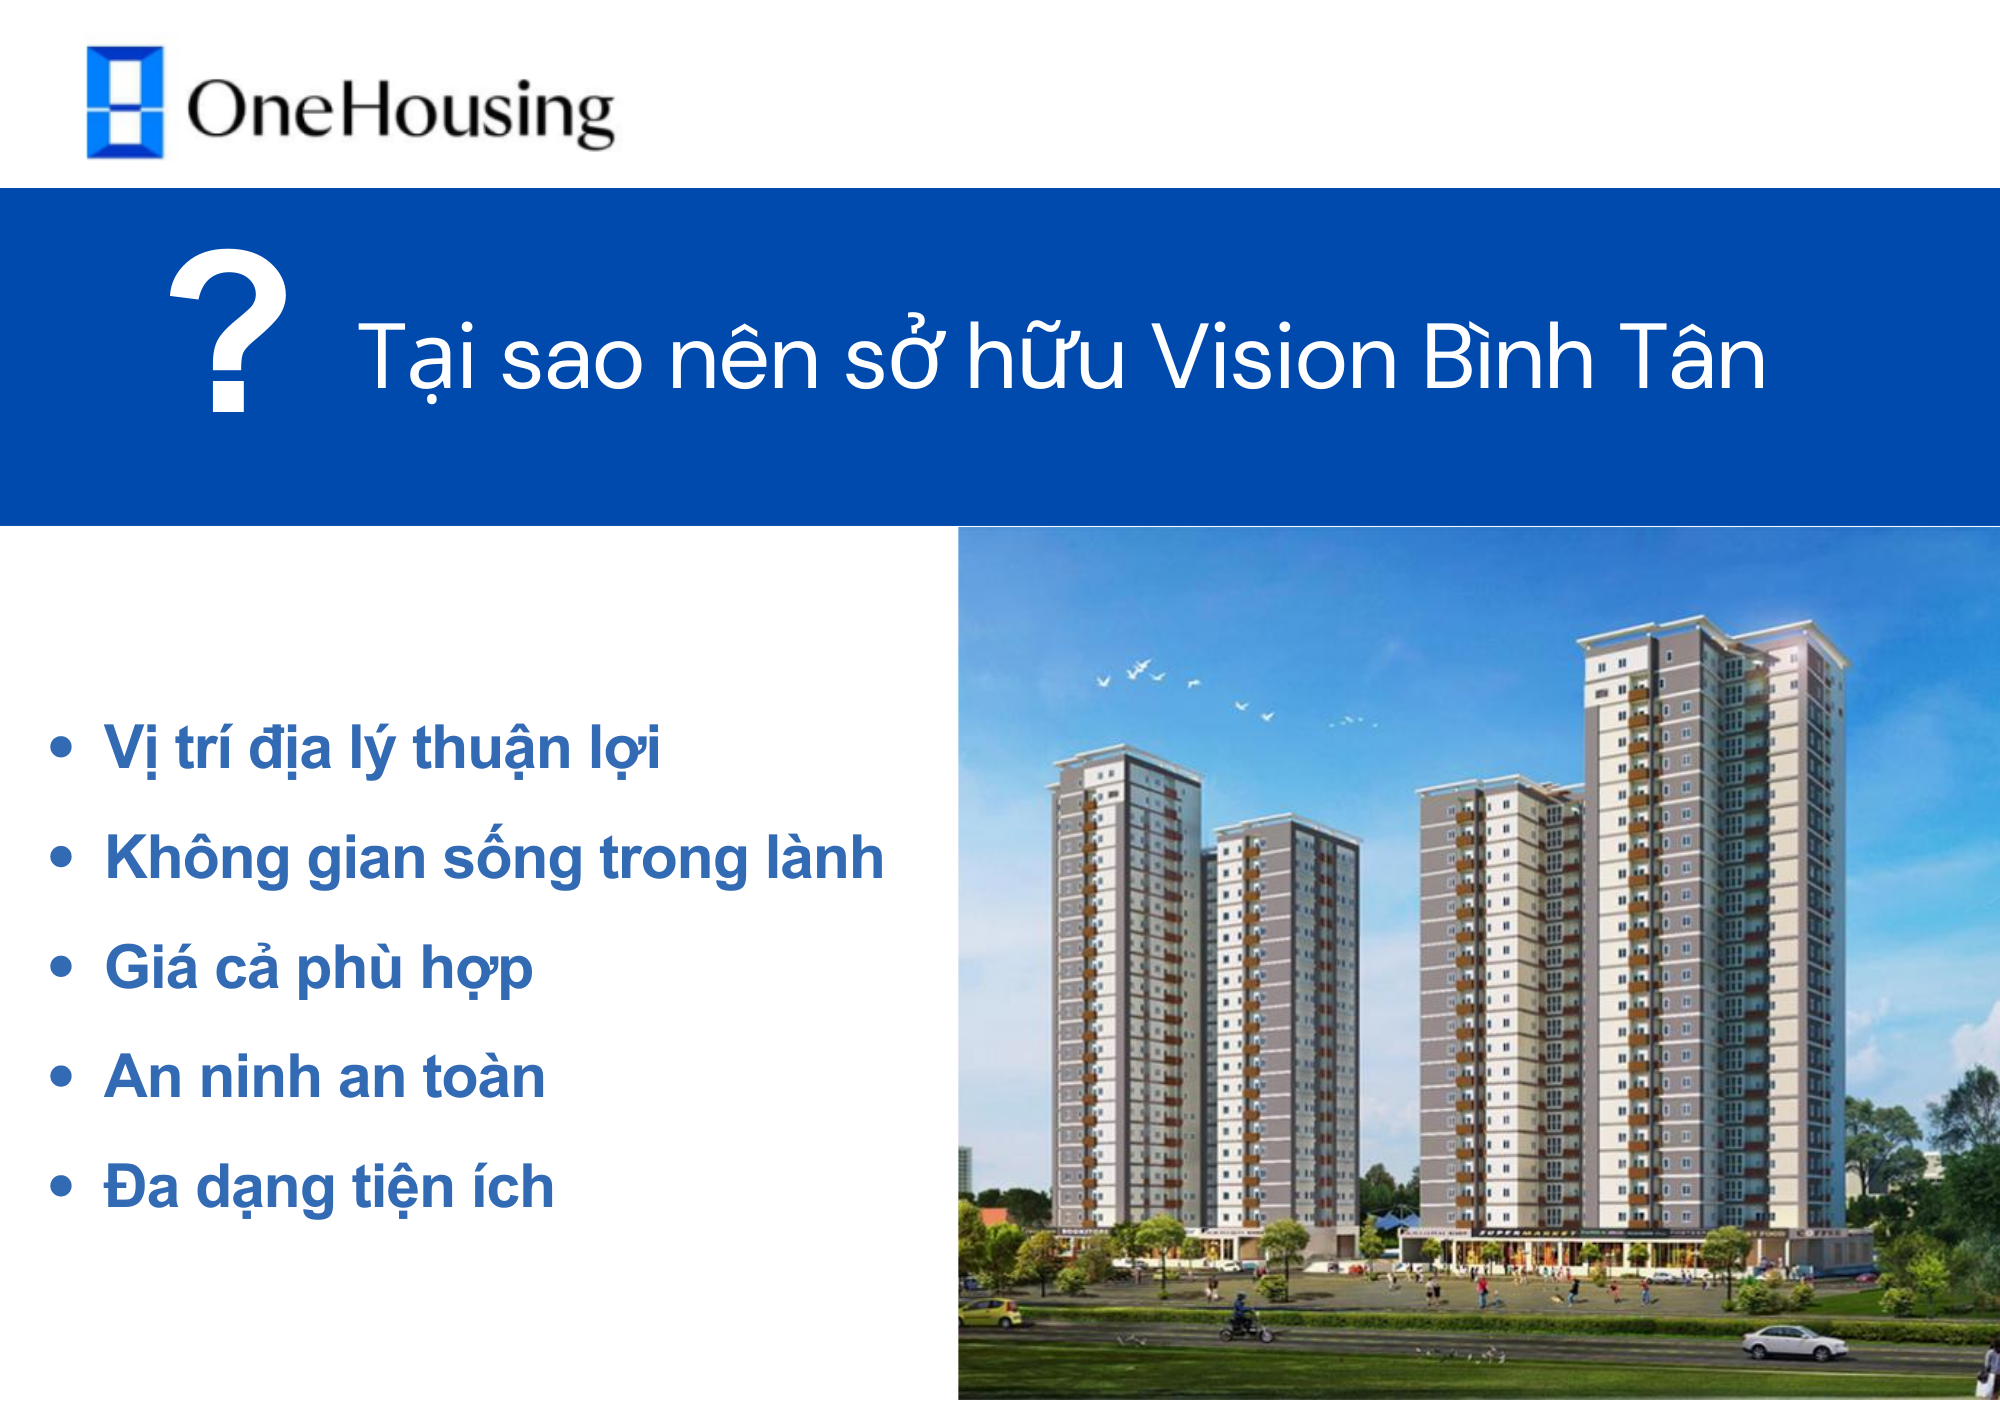 nhung-cau-hoi-thuong-gap-ve-chung-cu-vision-binh-tan-cho-nguoi-mua-lan-dau-tham-khao-onehousing-6